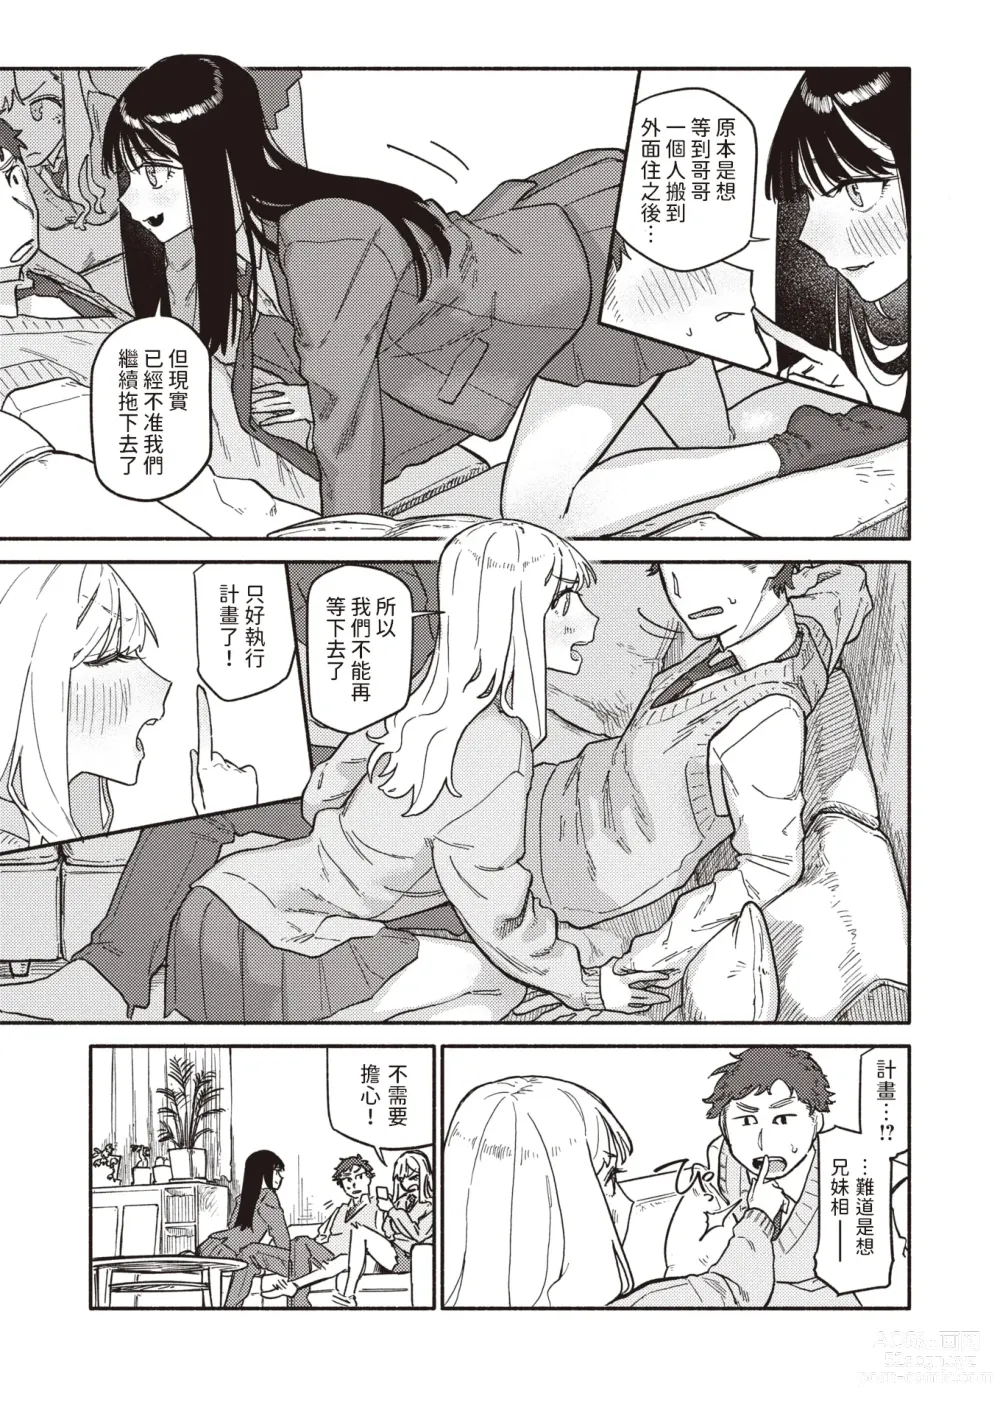 Page 7 of manga Futago wa Onii-chan ga Osuki